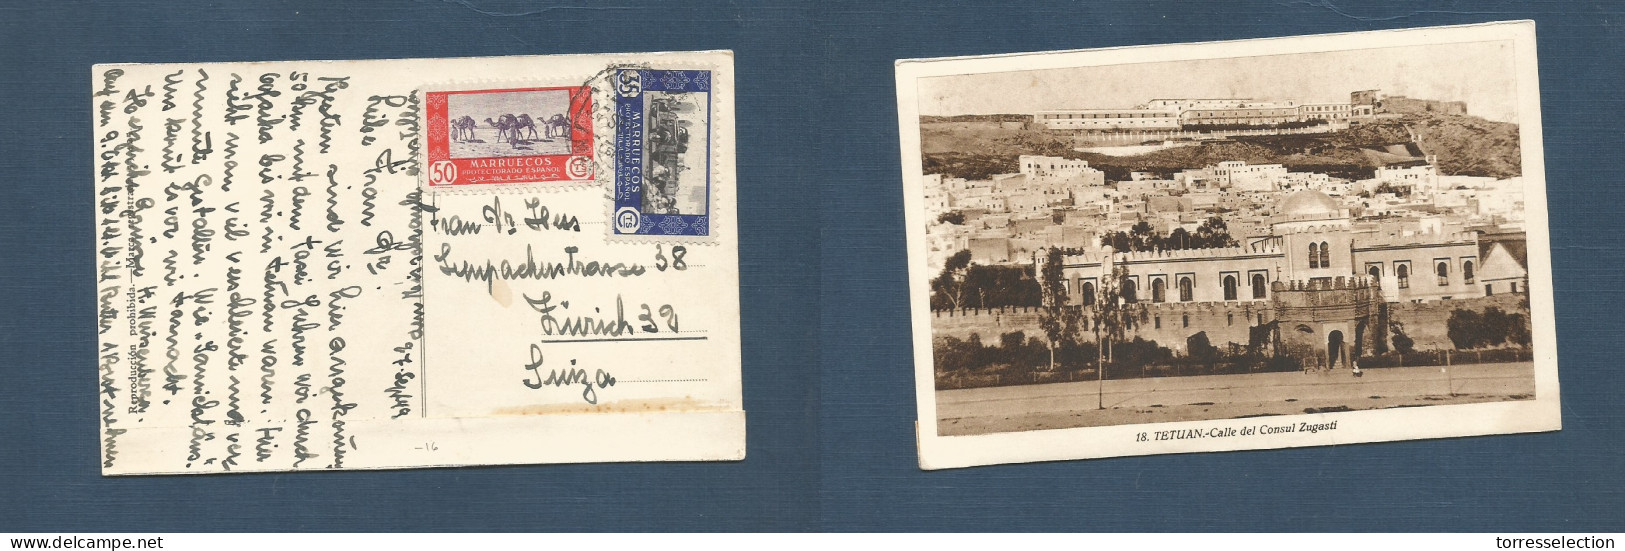 MARRUECOS. 1949 (27 Sept) Correo Español. Tetuan - Suiza, Zurich. TP Franqueo 0,85 Pts, Mat Fechador. - Morocco (1956-...)